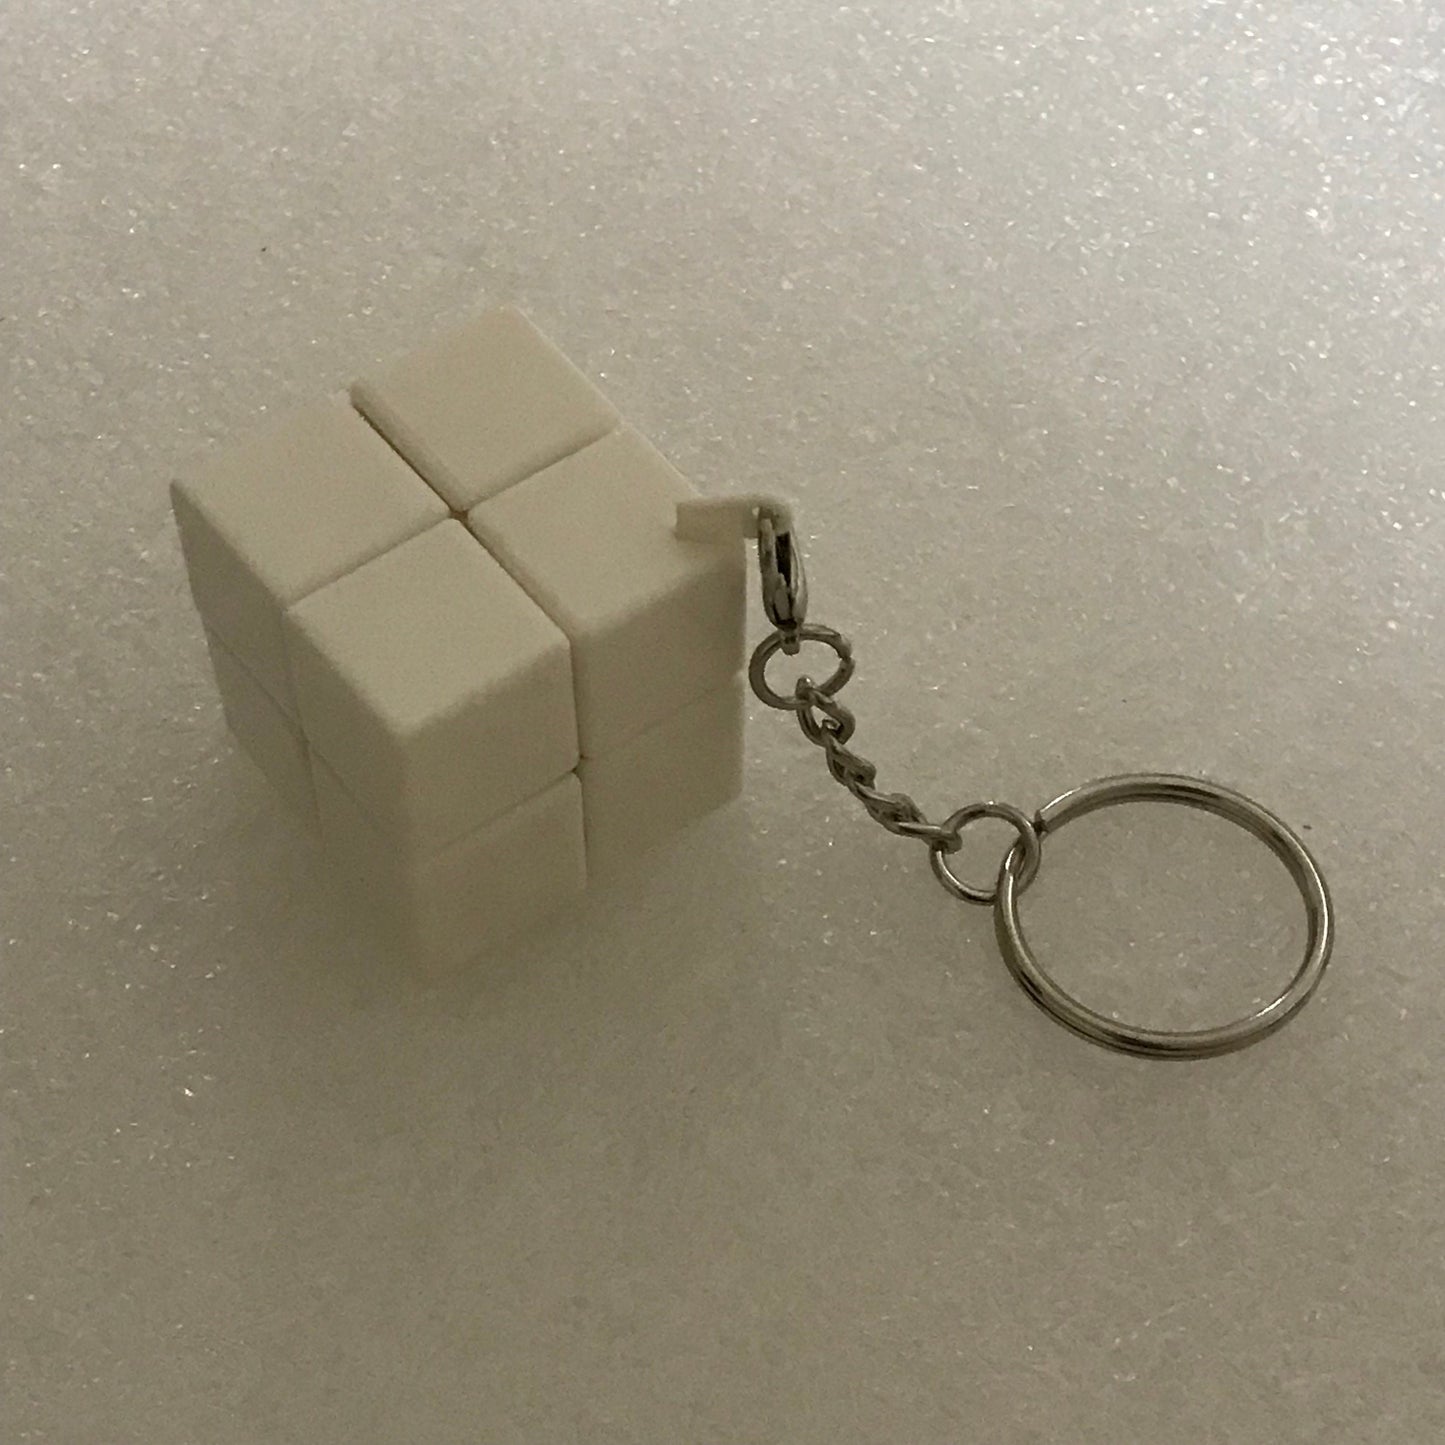 Custom Multiphoto Photo Cube Keychain Photo Keychain / Mini personalized photo puzzle cube keychain / Fidget toy keychain / Fully Functional